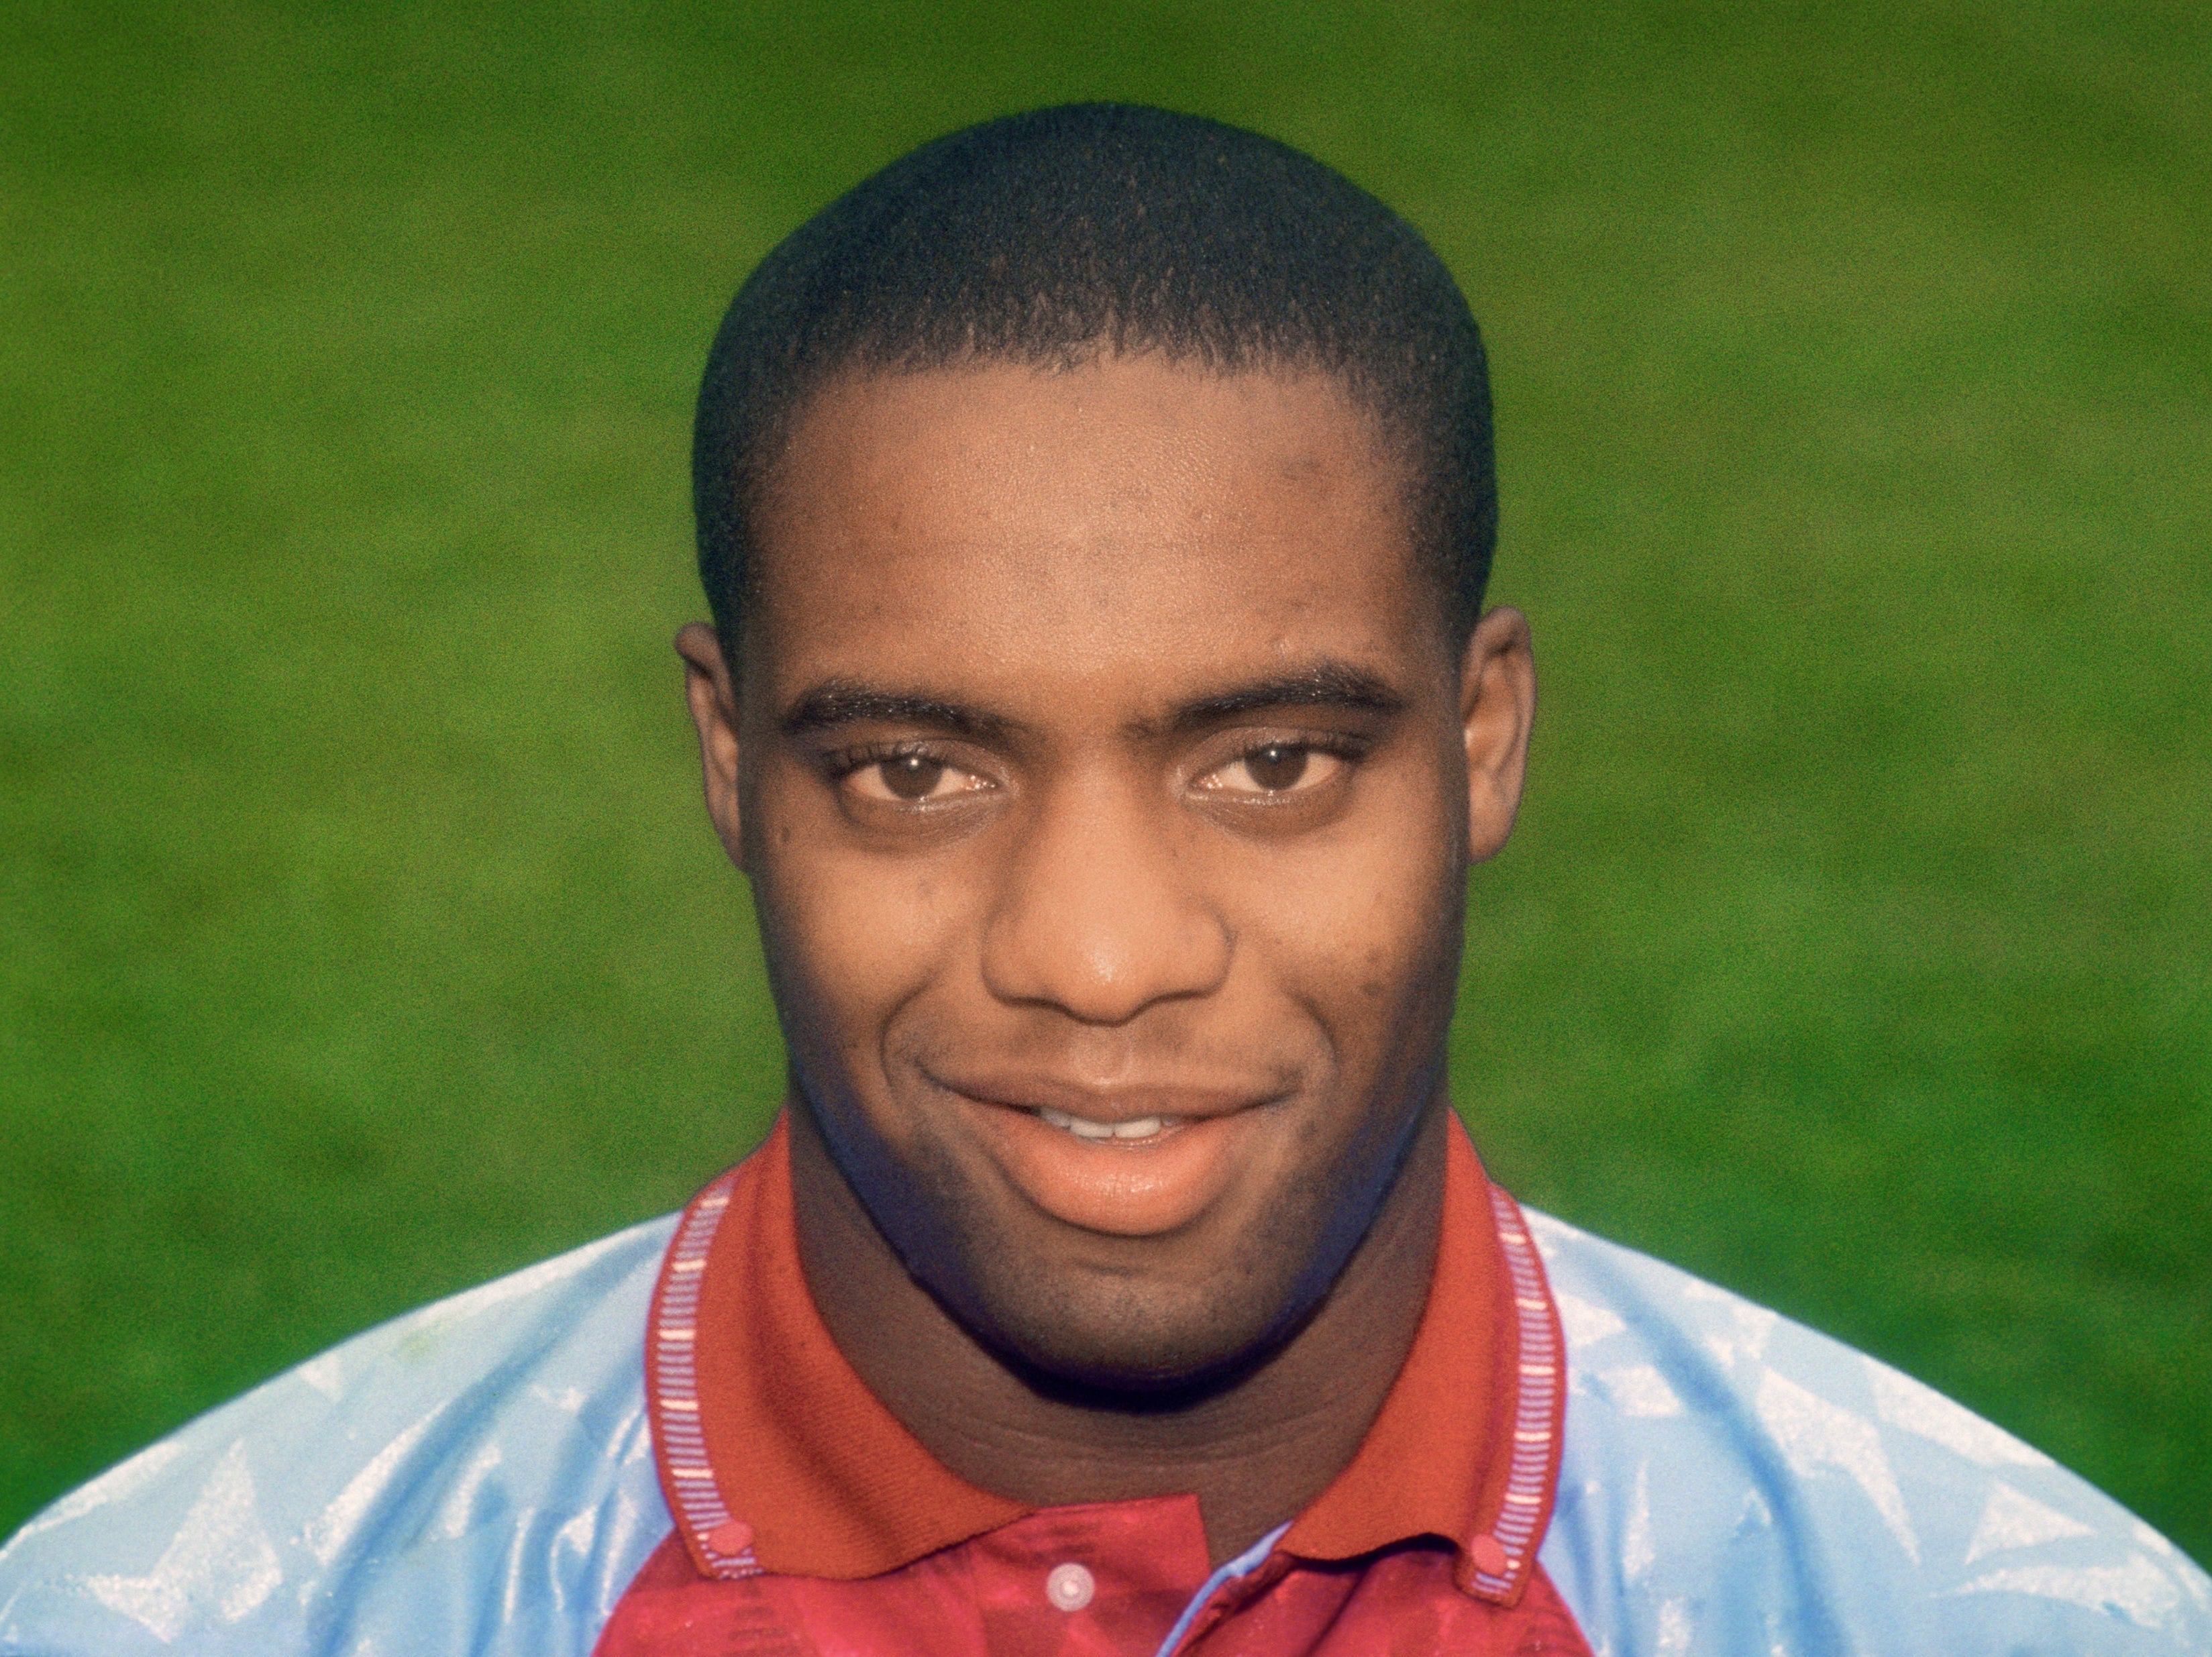 Former Aston Villa player Dalian Atkinson who died in August 2016